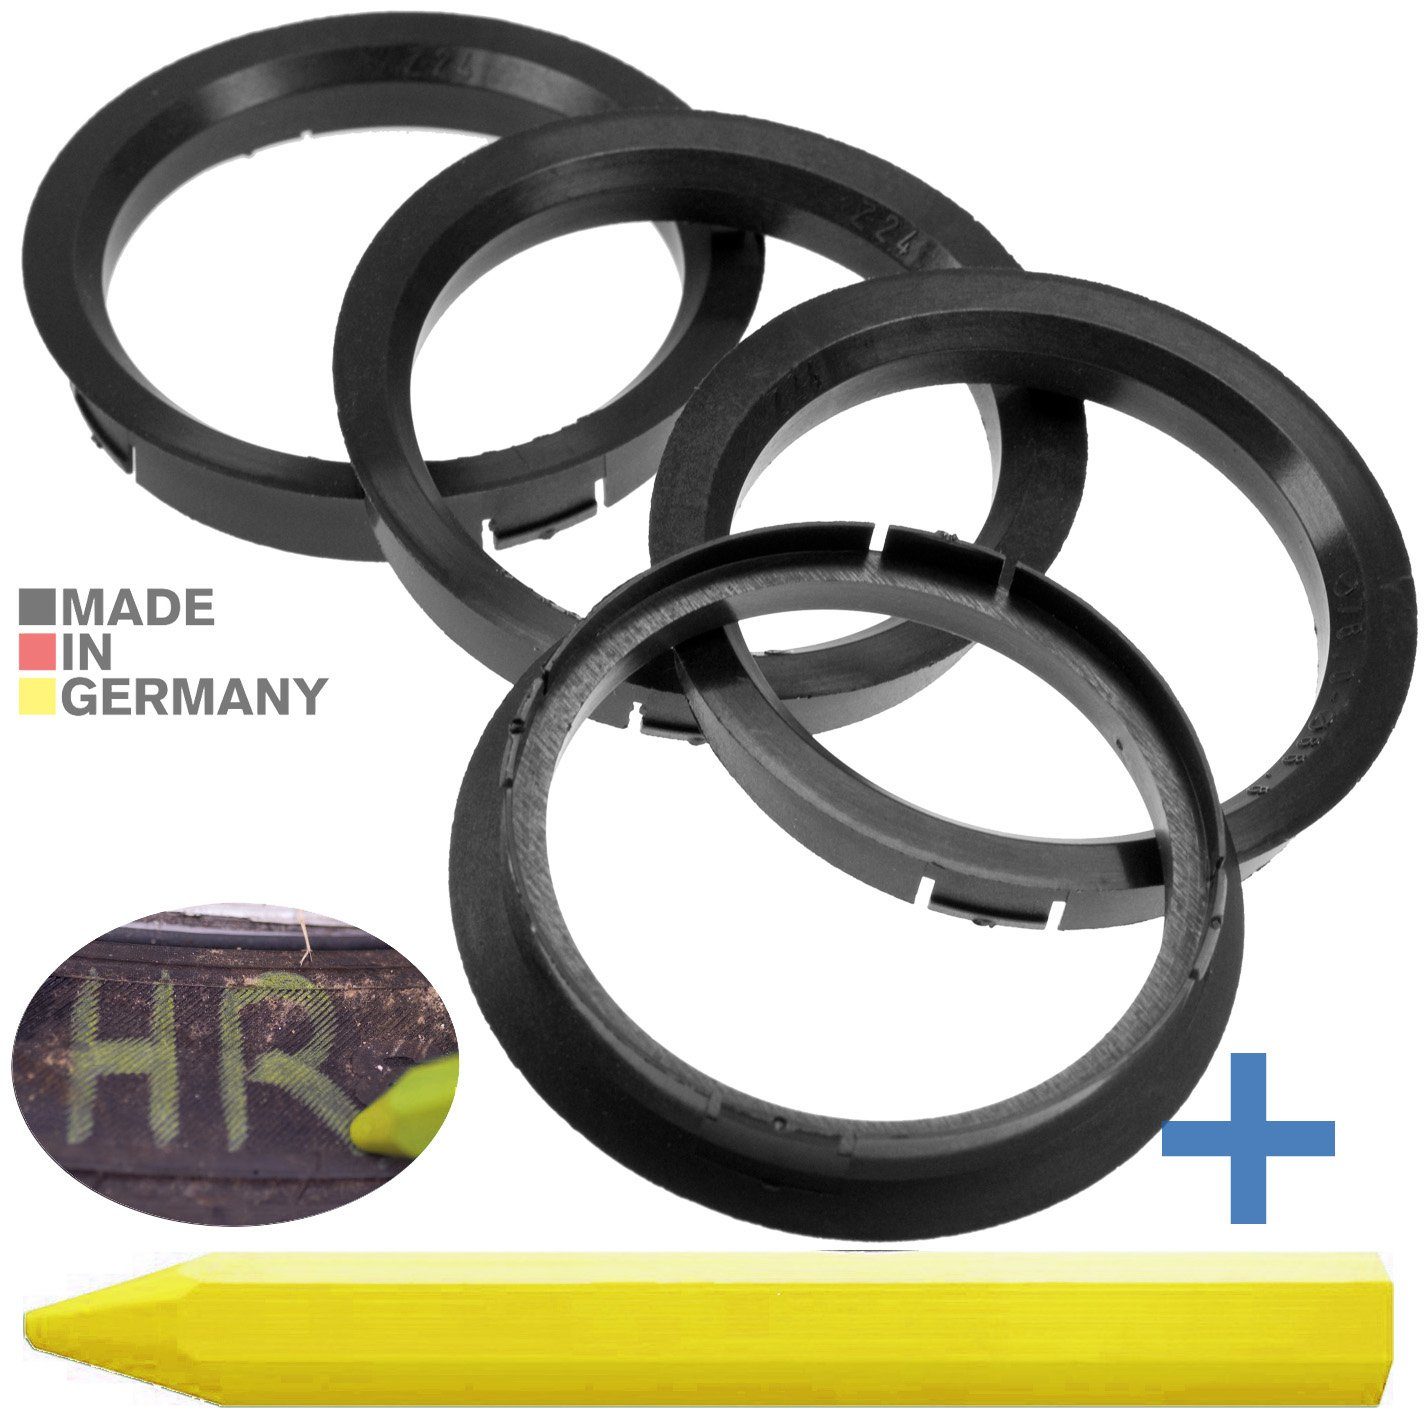 RKC Reifenstift 4X Zentrierringe Schwarz Felgen Ringe + 1x Reifen Kreide Fett Stift, Maße: 76,0 x 66,6 mm